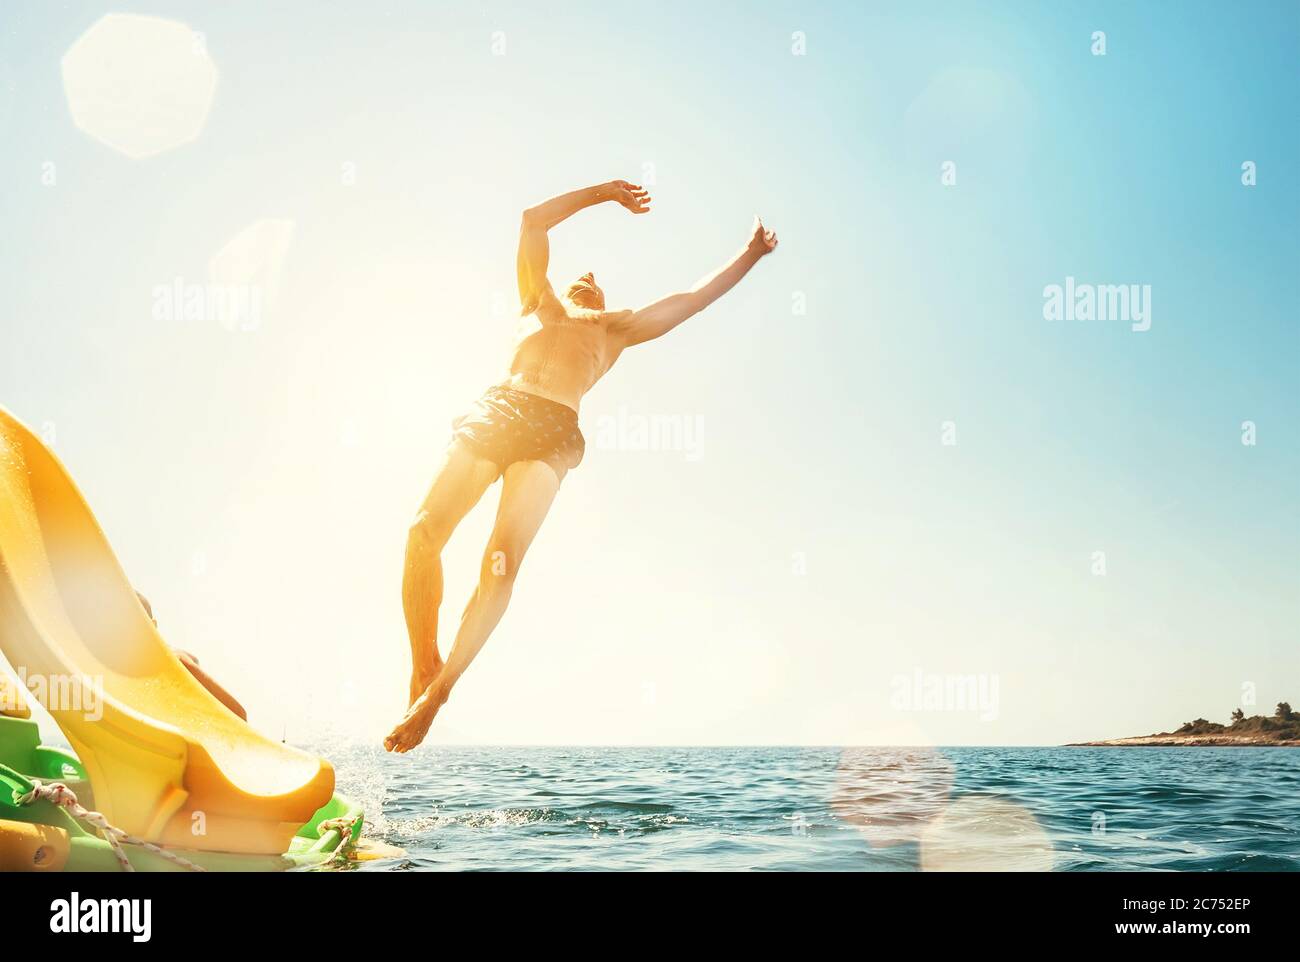 Mann springt rückwärts und springt ins Meer. Happy Beach Urlaub Konzept Bild. Stockfoto